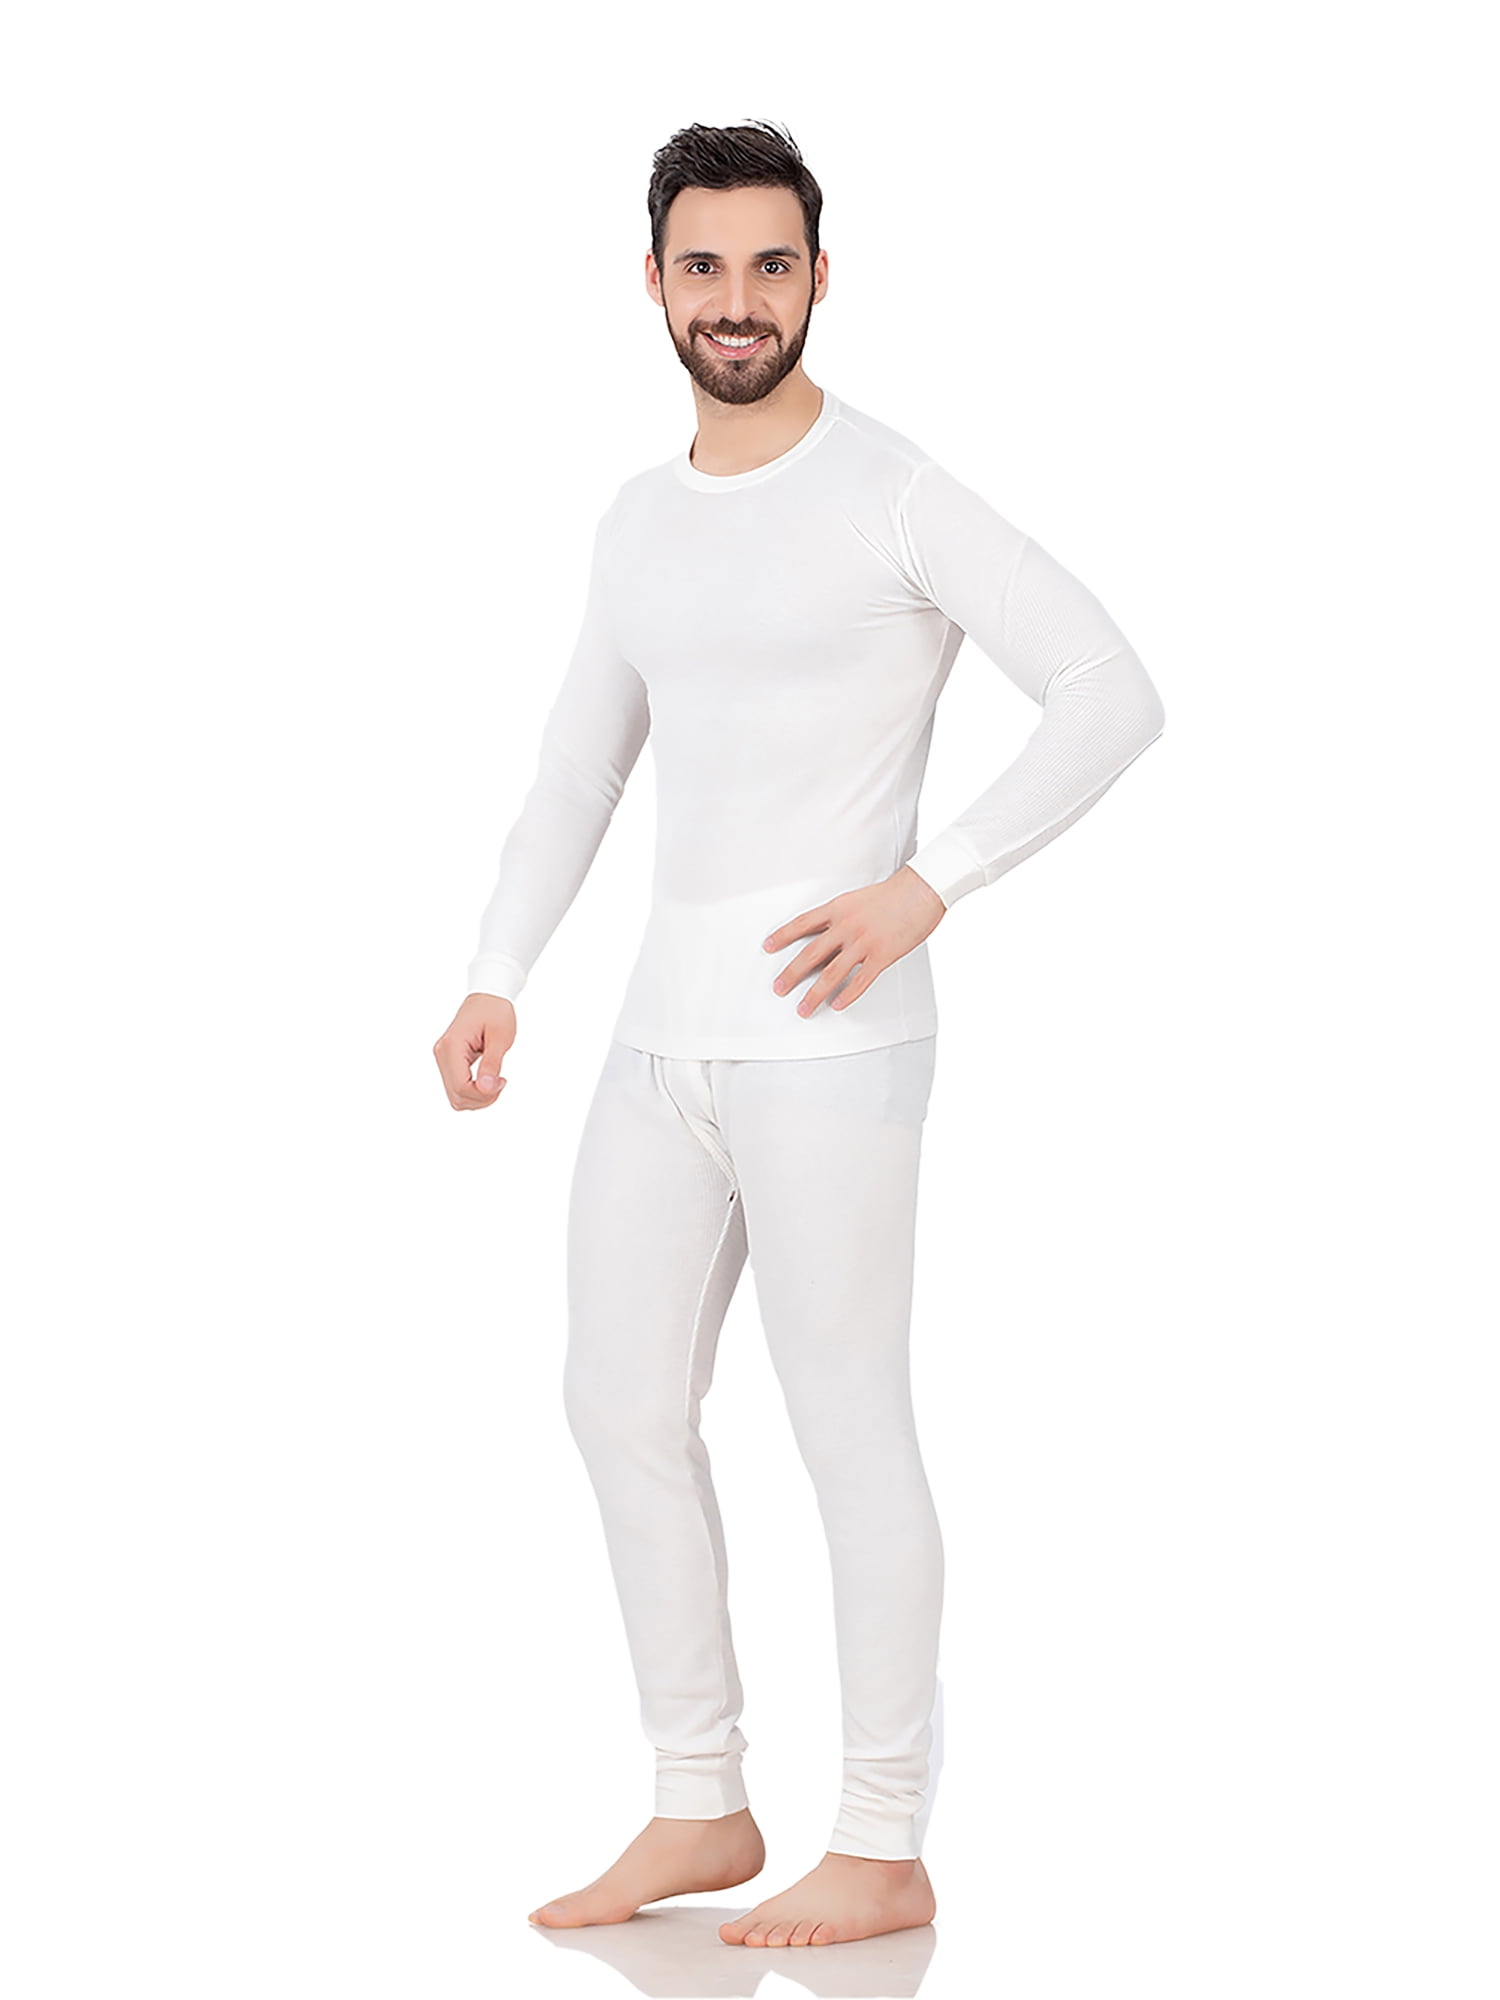 Men's CottonRich Long Johns Thermal Underwear Set Medium 